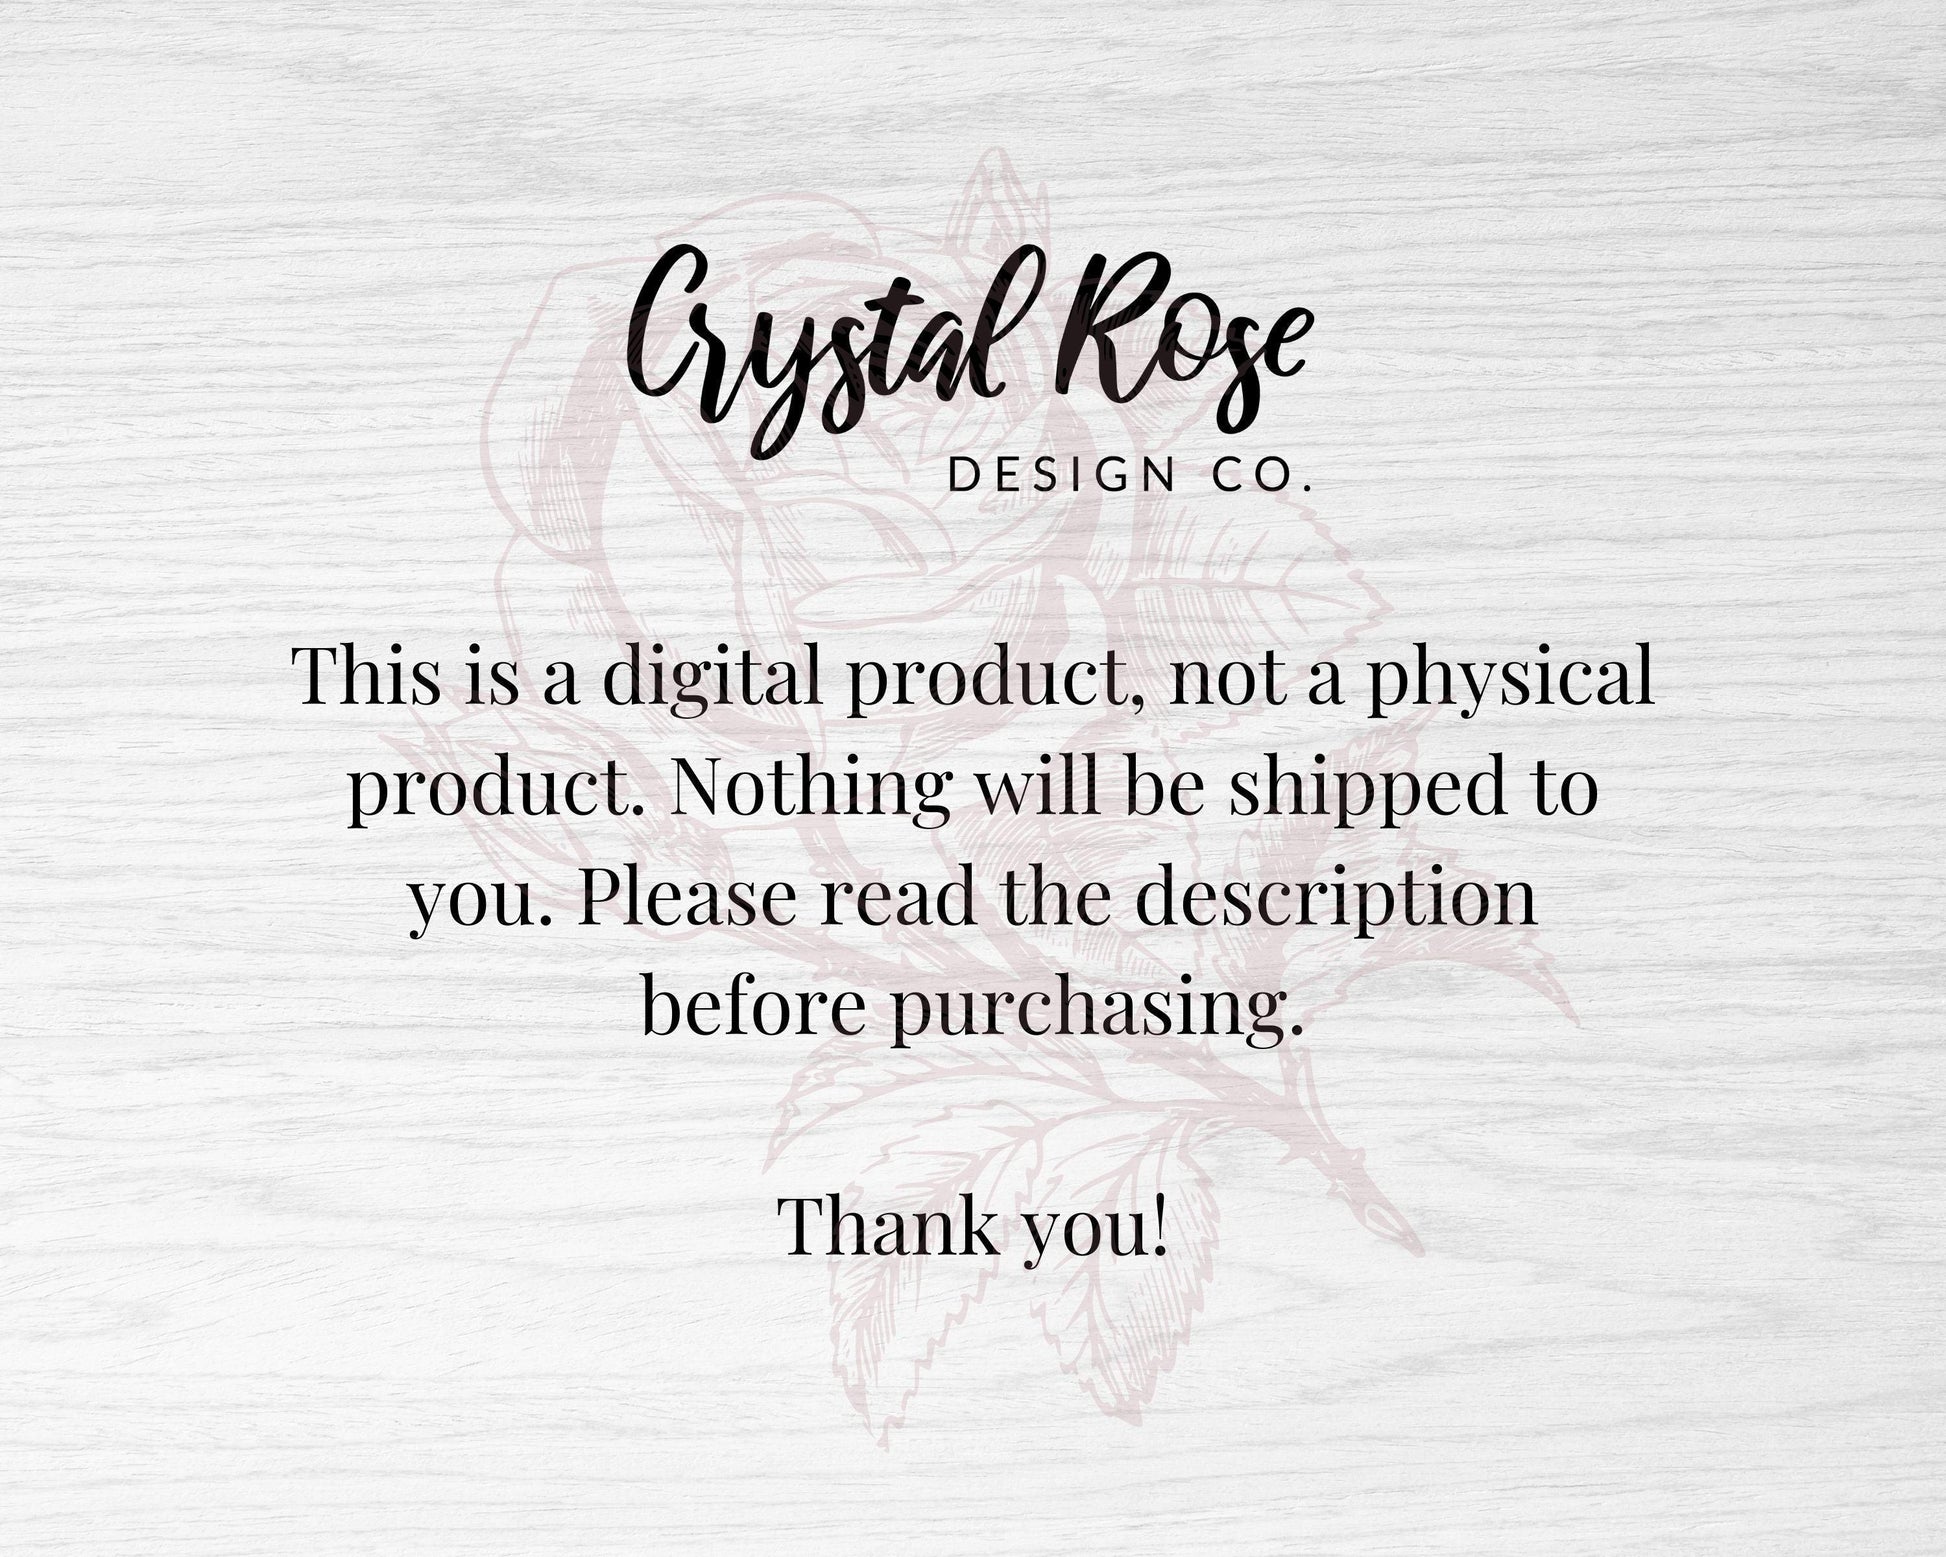 Retro Choose Kindness SVG, Inspirational SVG, Digital Download, Cricut, Silhouette, Glowforge (includes svg/png/dxf/eps) - Crystal Rose Design Co.